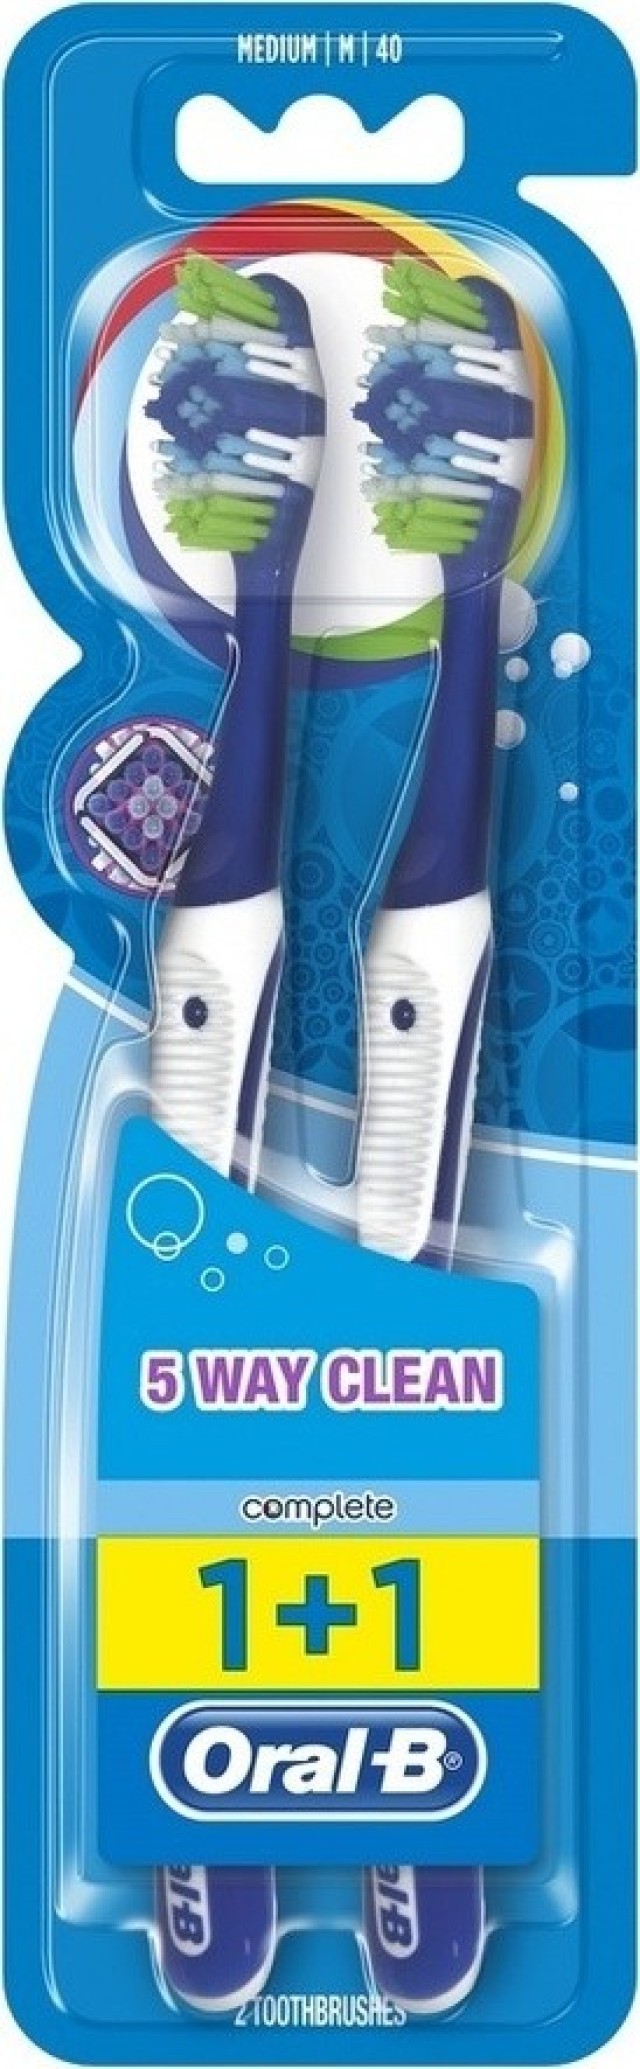 Oral-B Complete Clean 5 Way 1+1 Medium Οδοντόβουρτσα, Μπλε - Μπλε